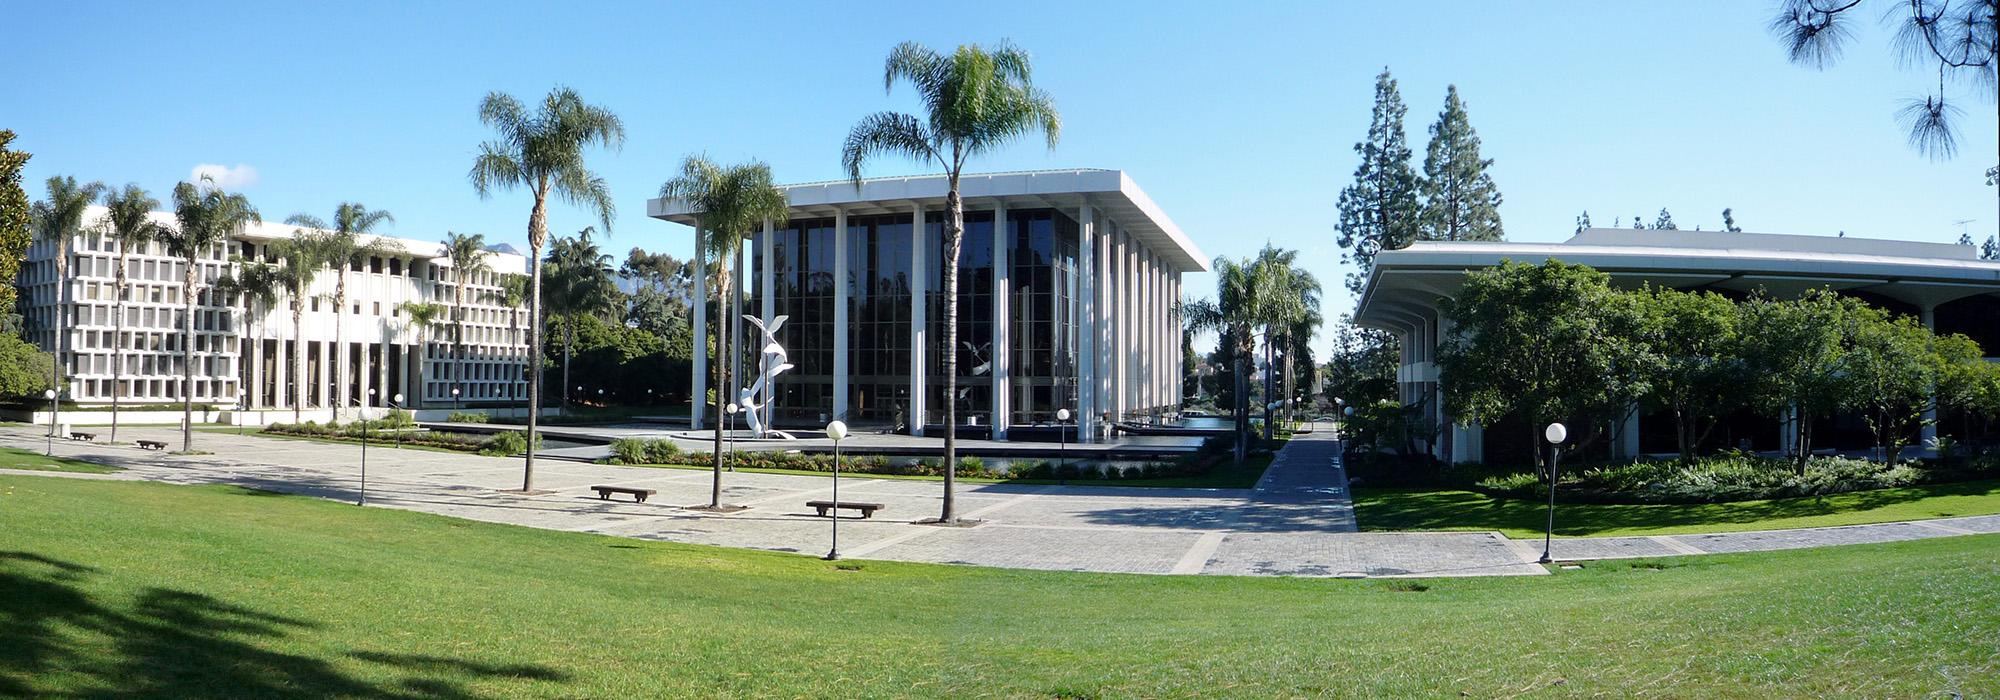 Ambassador College, Pasadena, CA